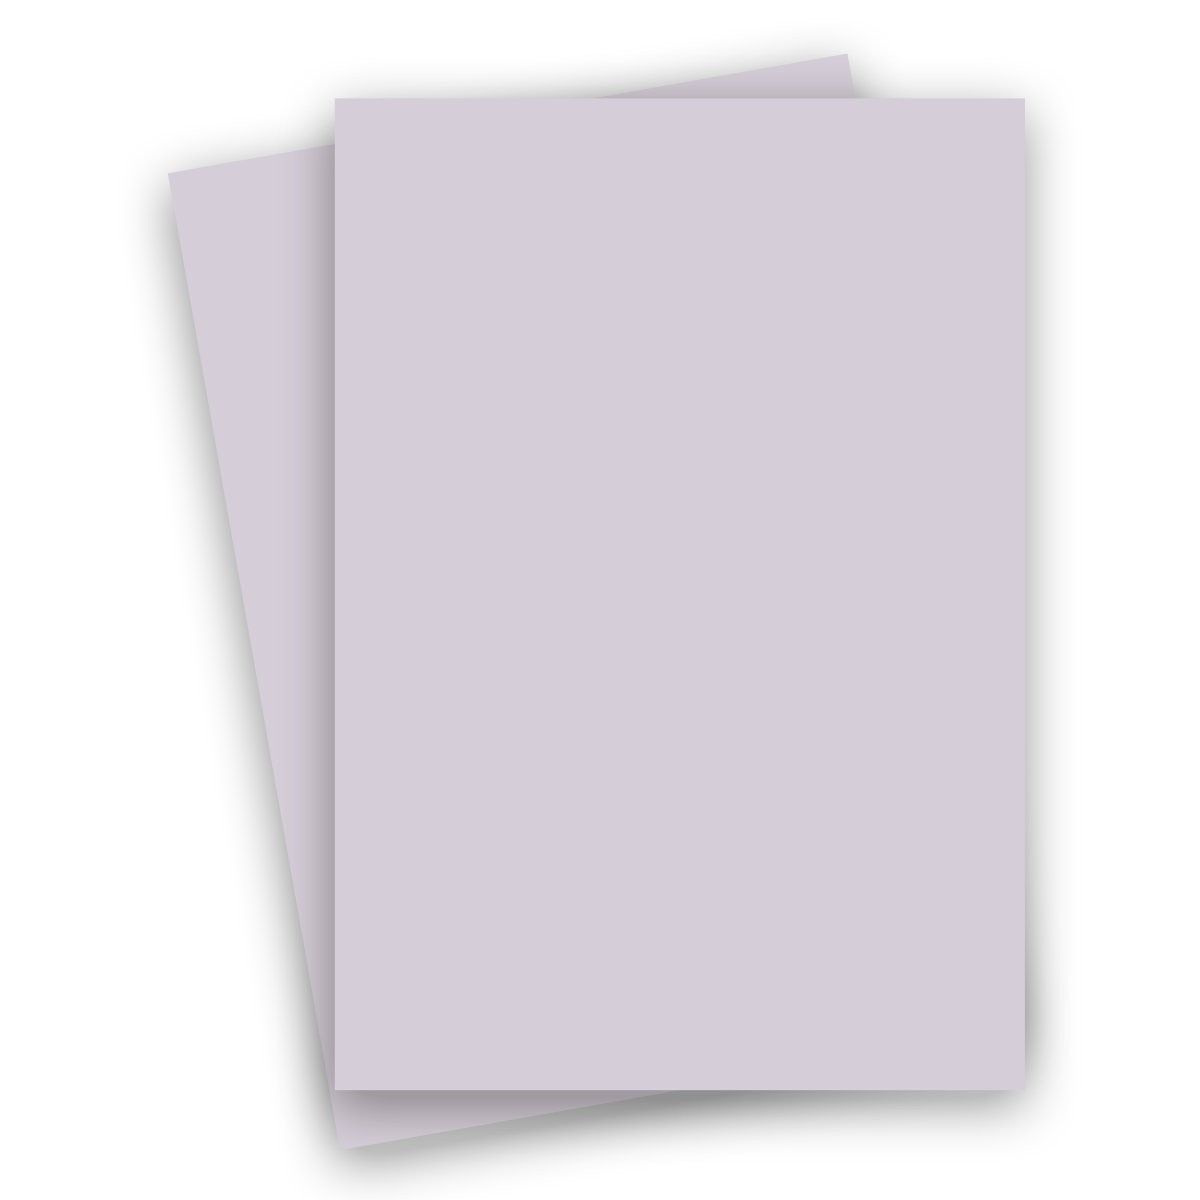 Burano PINK (10) - 12X12 Lightweight Cardstock Paper - 52lb Cover (140gsm)  - 75 PK